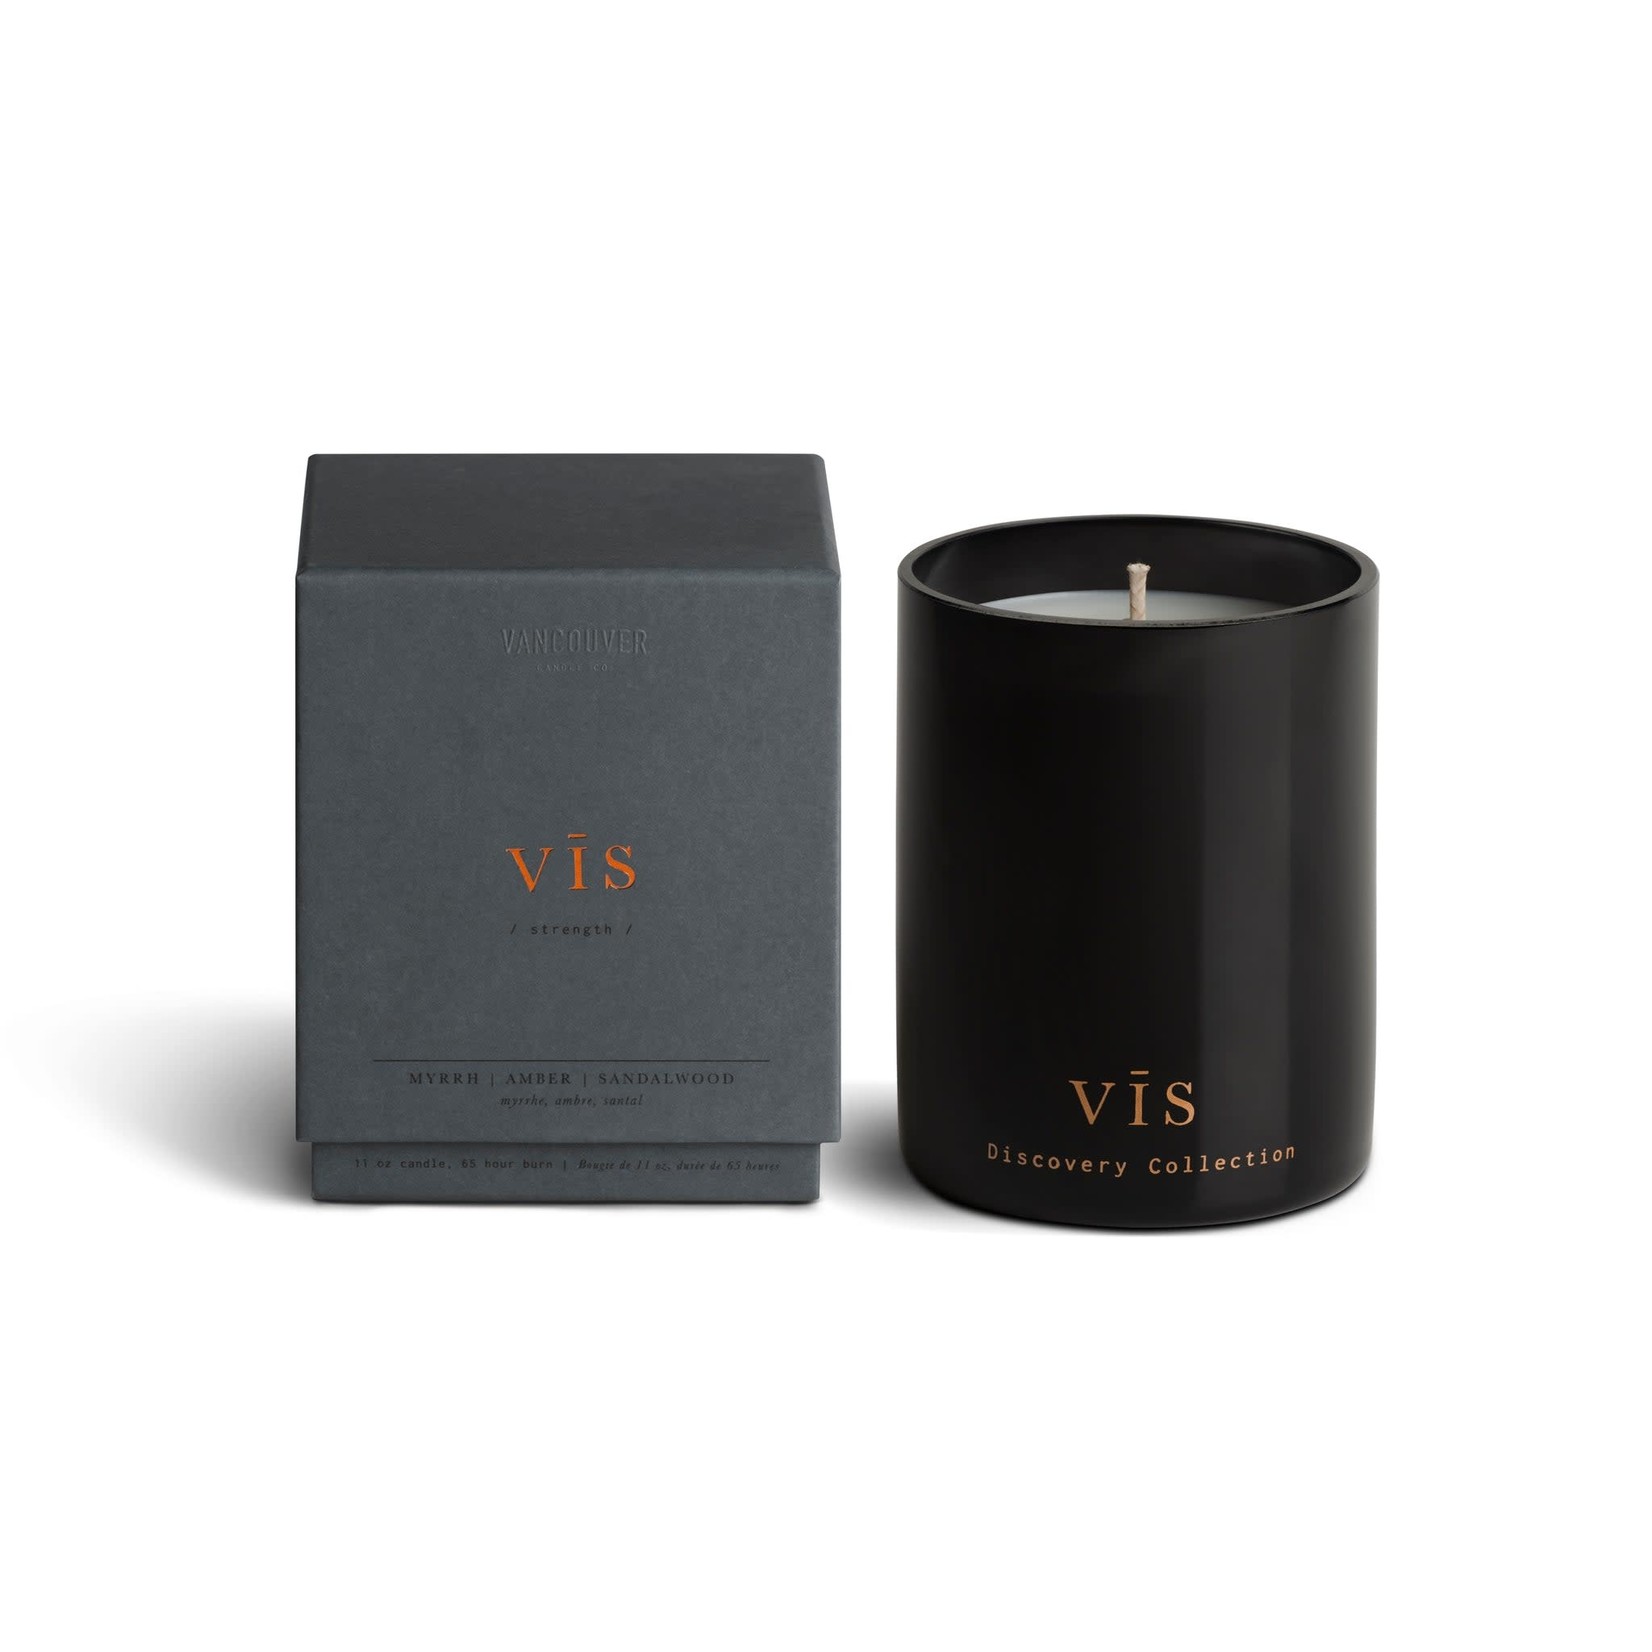 VIS - Single Wick Boxed Candle - Myrrh, Amber, Sandalwood